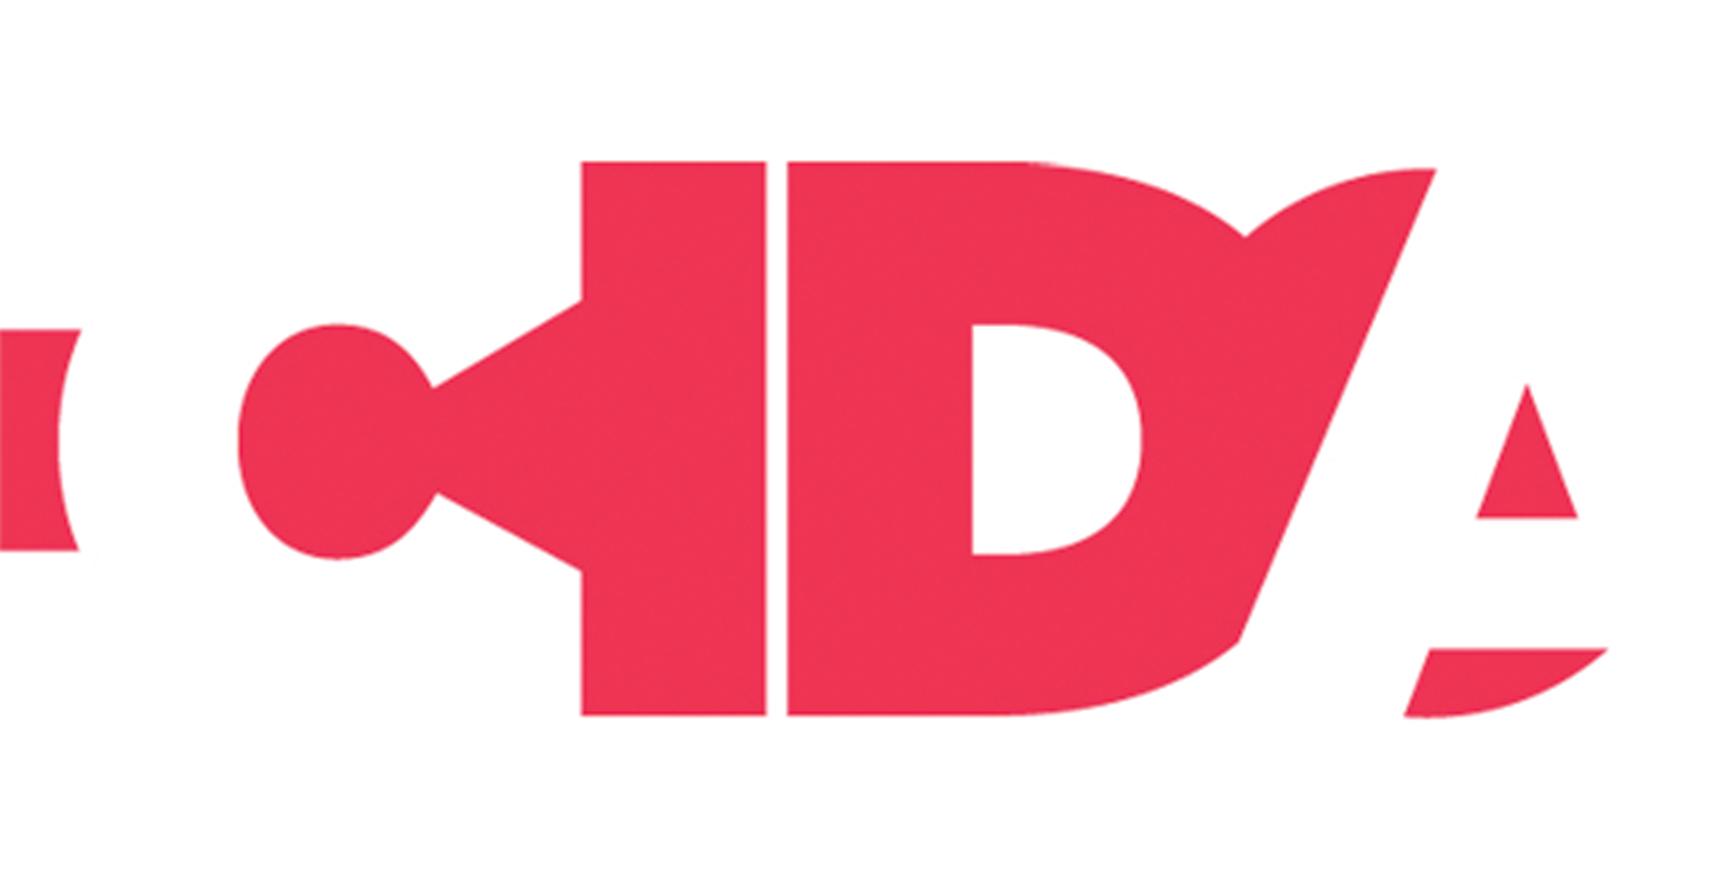 CIDA logo